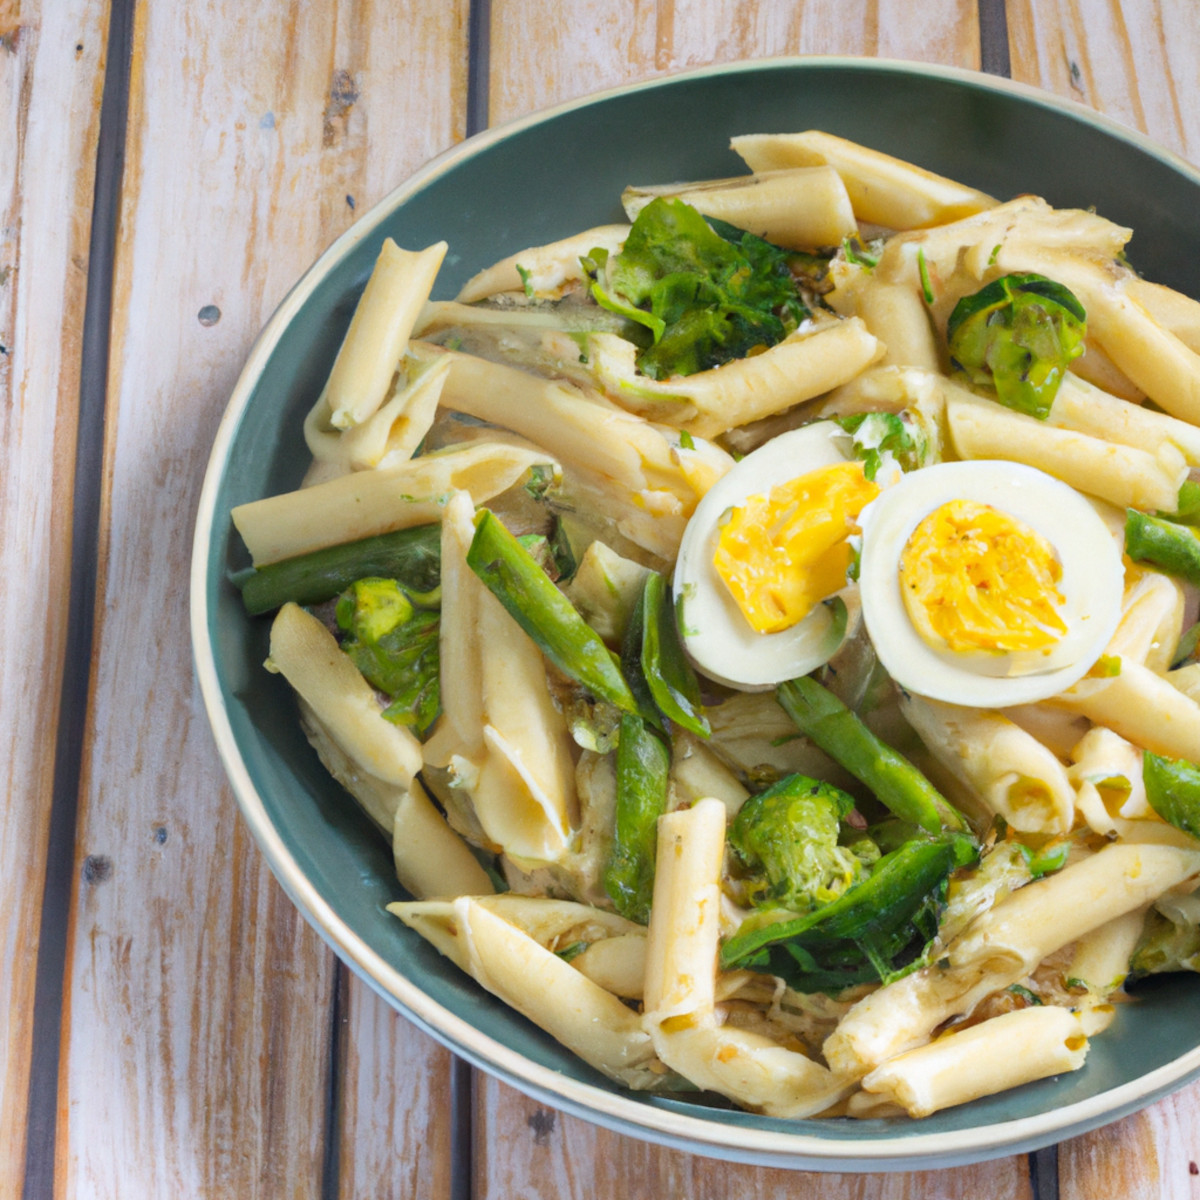 seasoned broccoli and eggs pasta salad